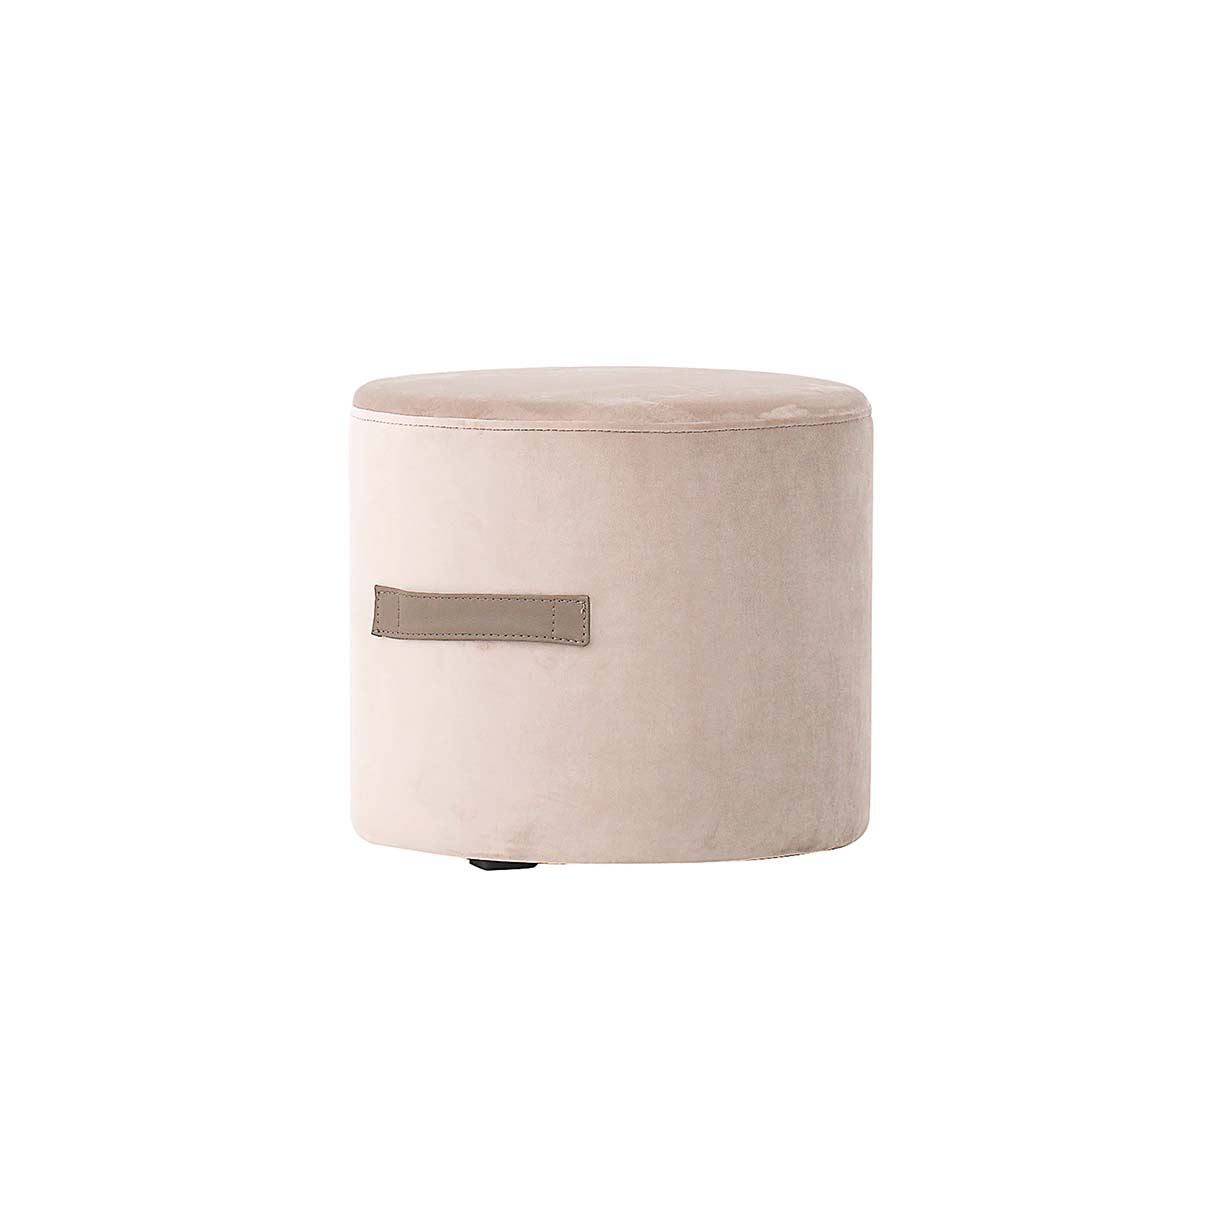 Пуф для туалетного столика Enza Home Netha, 48x48x42 см, ткань 21711 Cream07.220.0516.0851.0000.0000.217